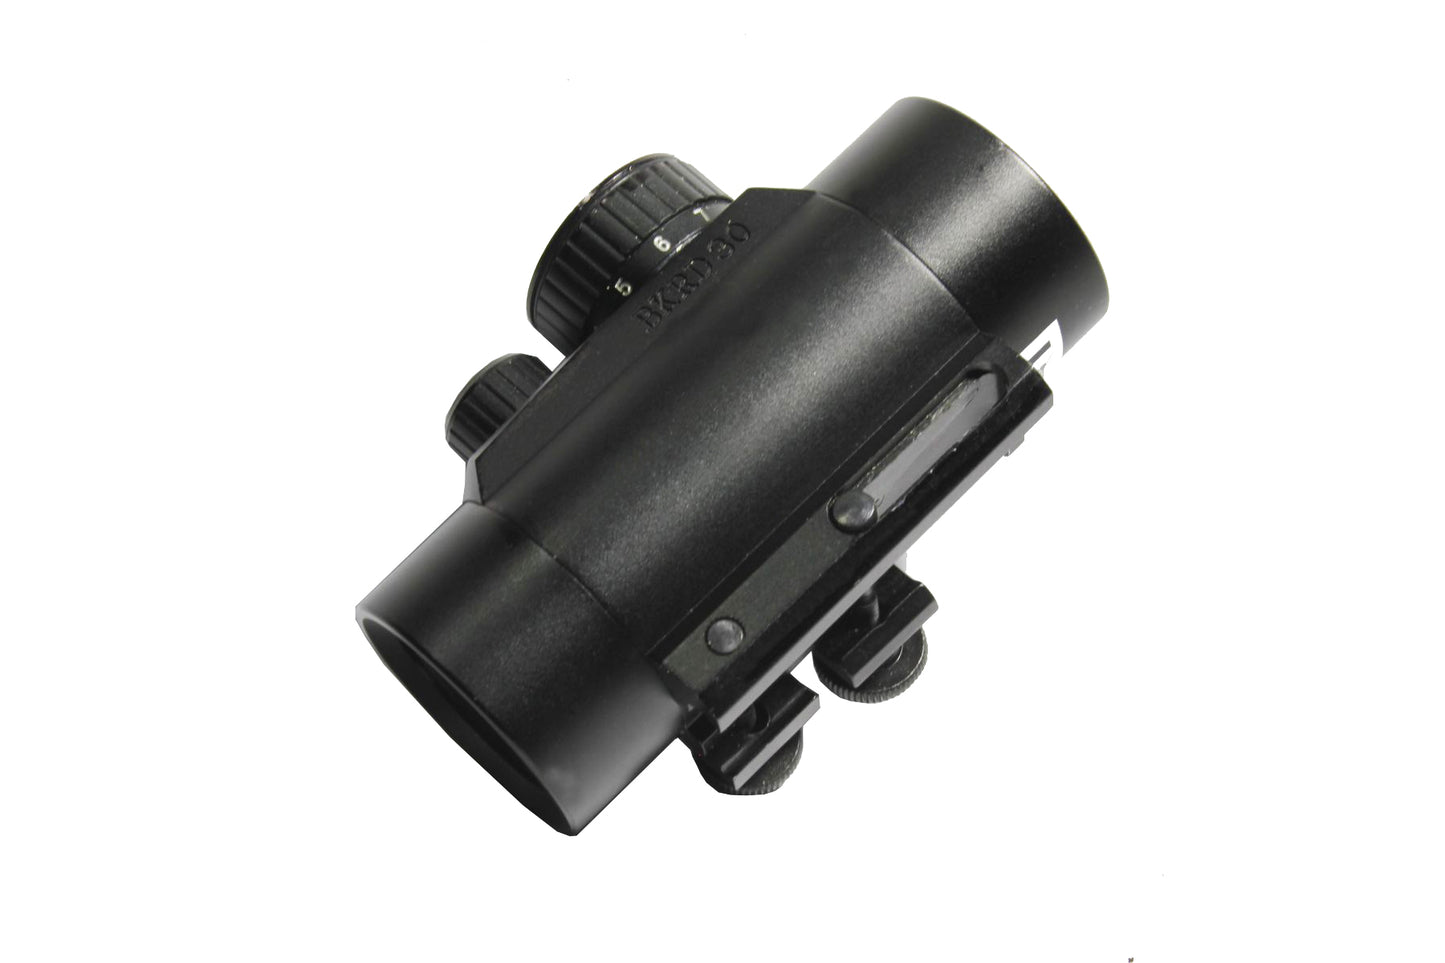 TASCO Red Dot Optic | Adjustable Illumination | Integrated Mounting